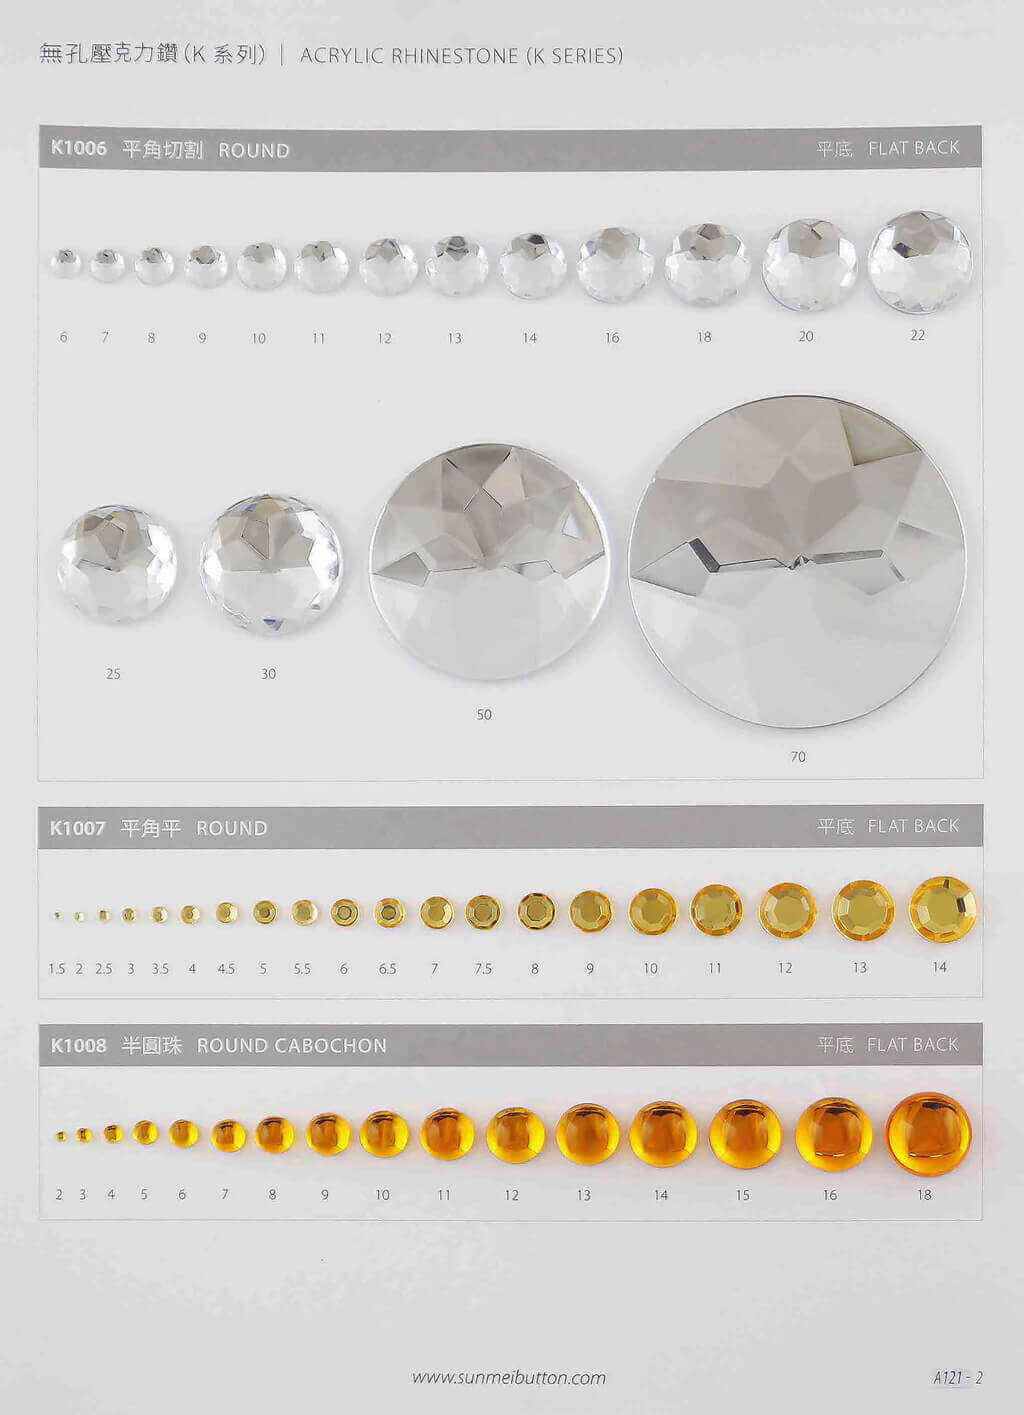 A121-2-acrylic rhinestone catalogue transparent